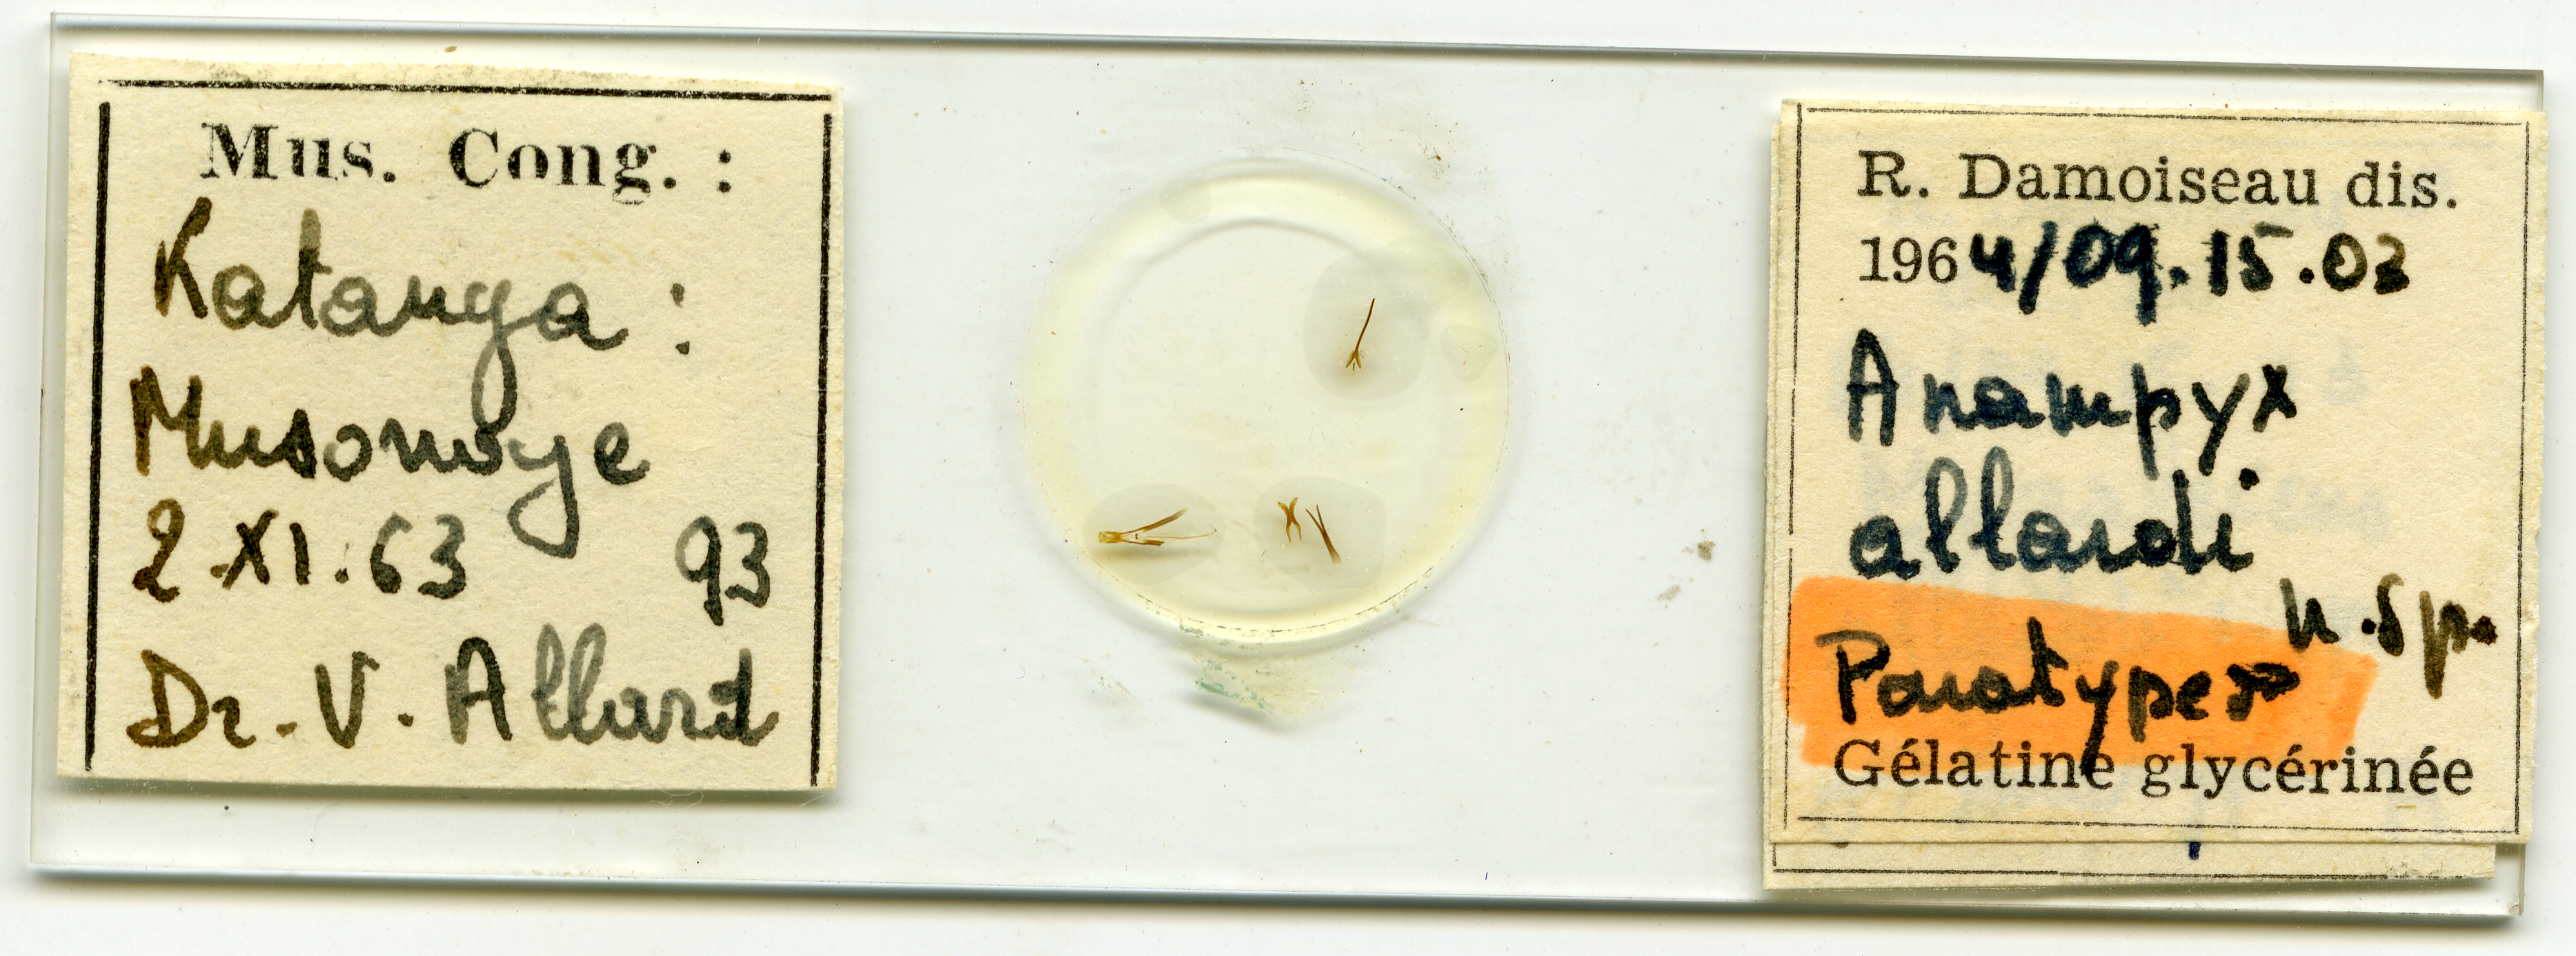 Anampyx allardi pt Microscopic preparation.png